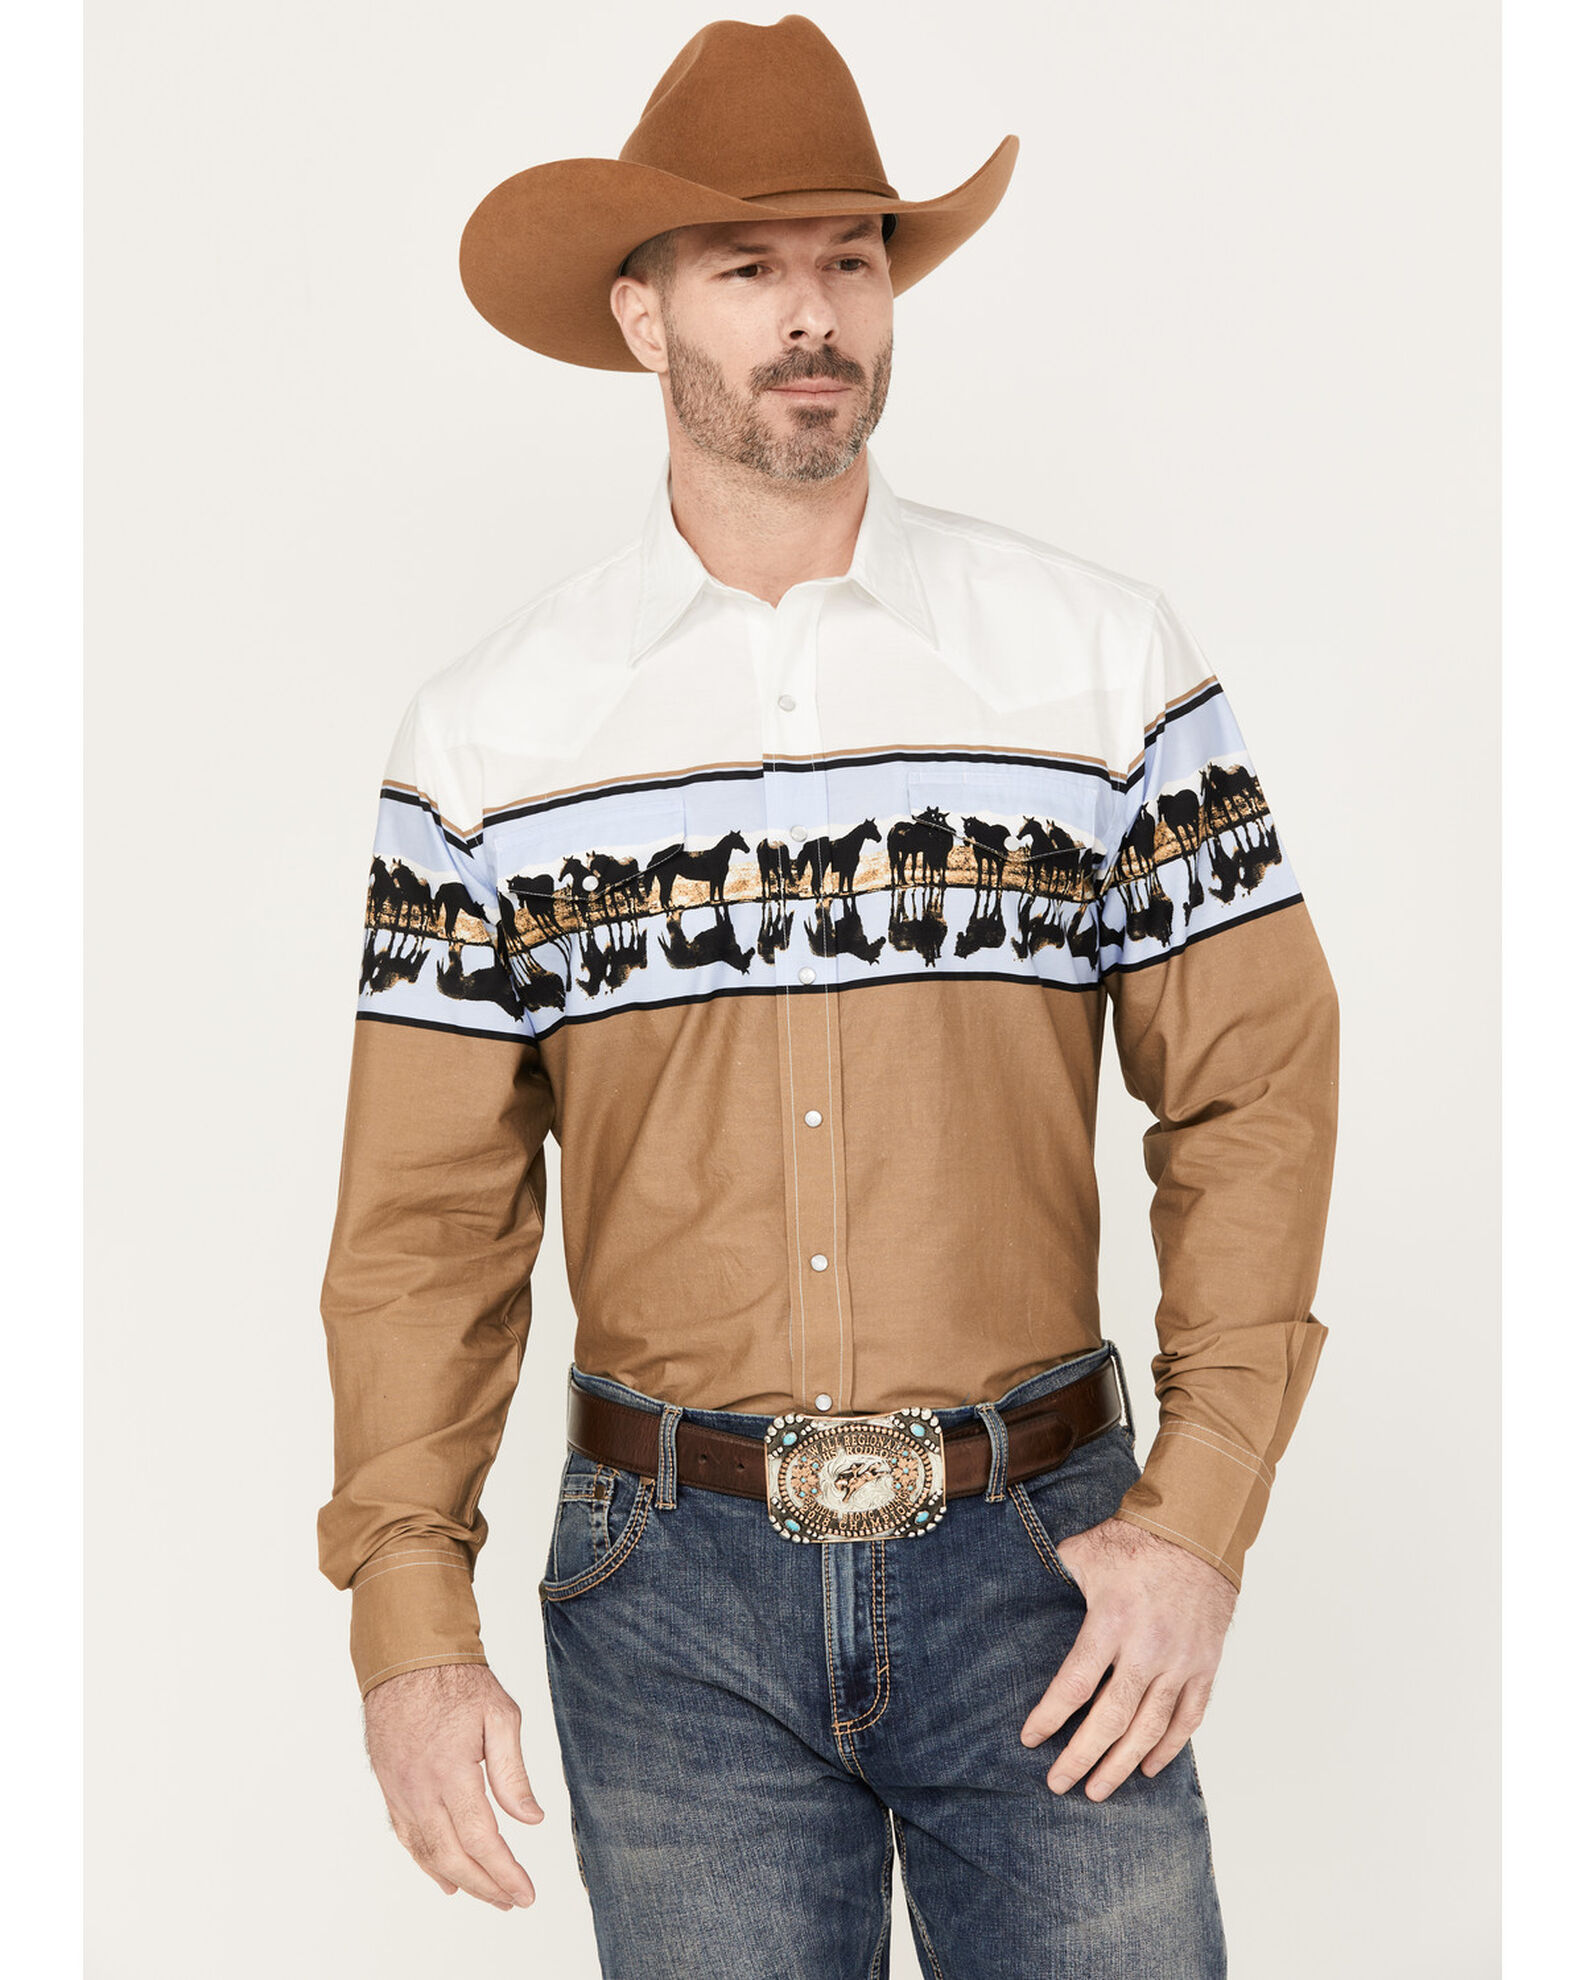 Product Name: Roper Men's Vintage Border Long Sleeve Western Pearl Snap  Shirt